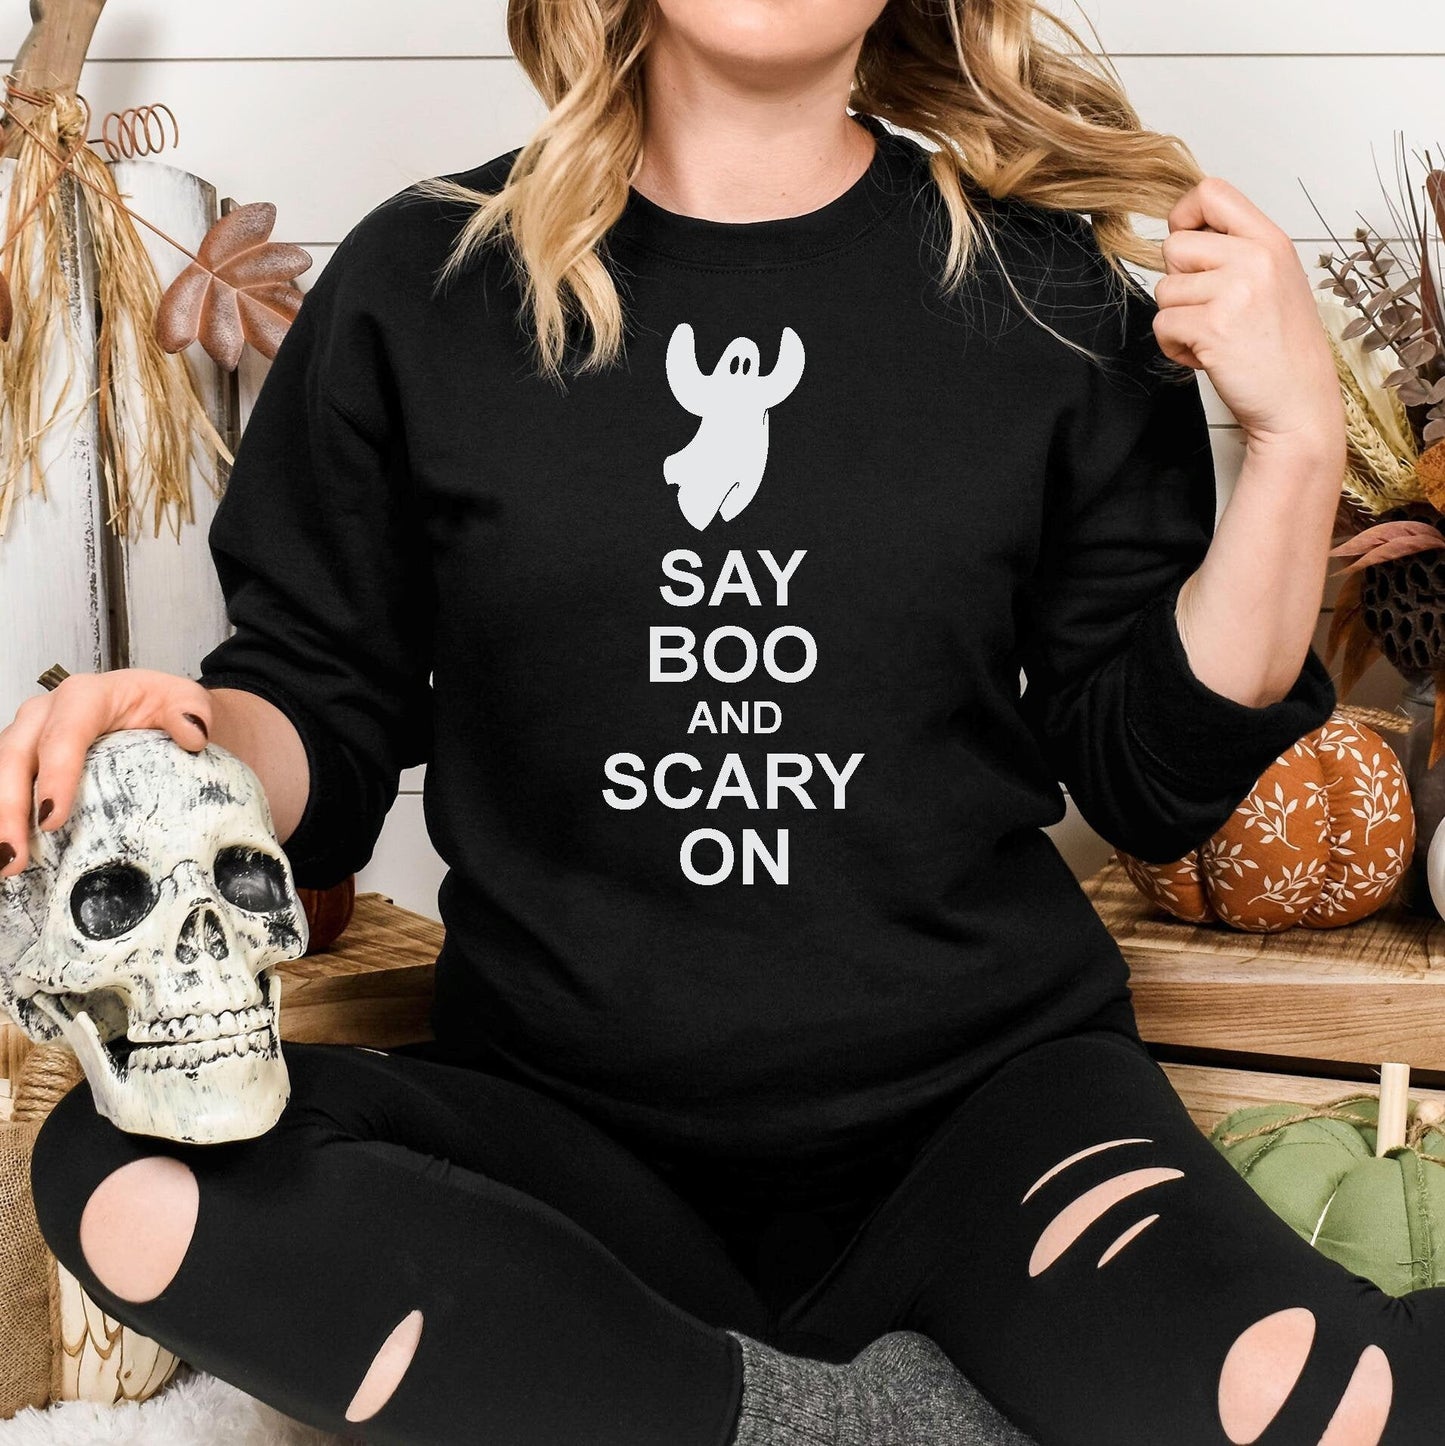 Halloween ghost Sweatshirt, Cute Ghost sweater, Say Boo and Scary on, Keep Calm and carry on, teacher shirt, nurse sweatshirt - SBS T Shop